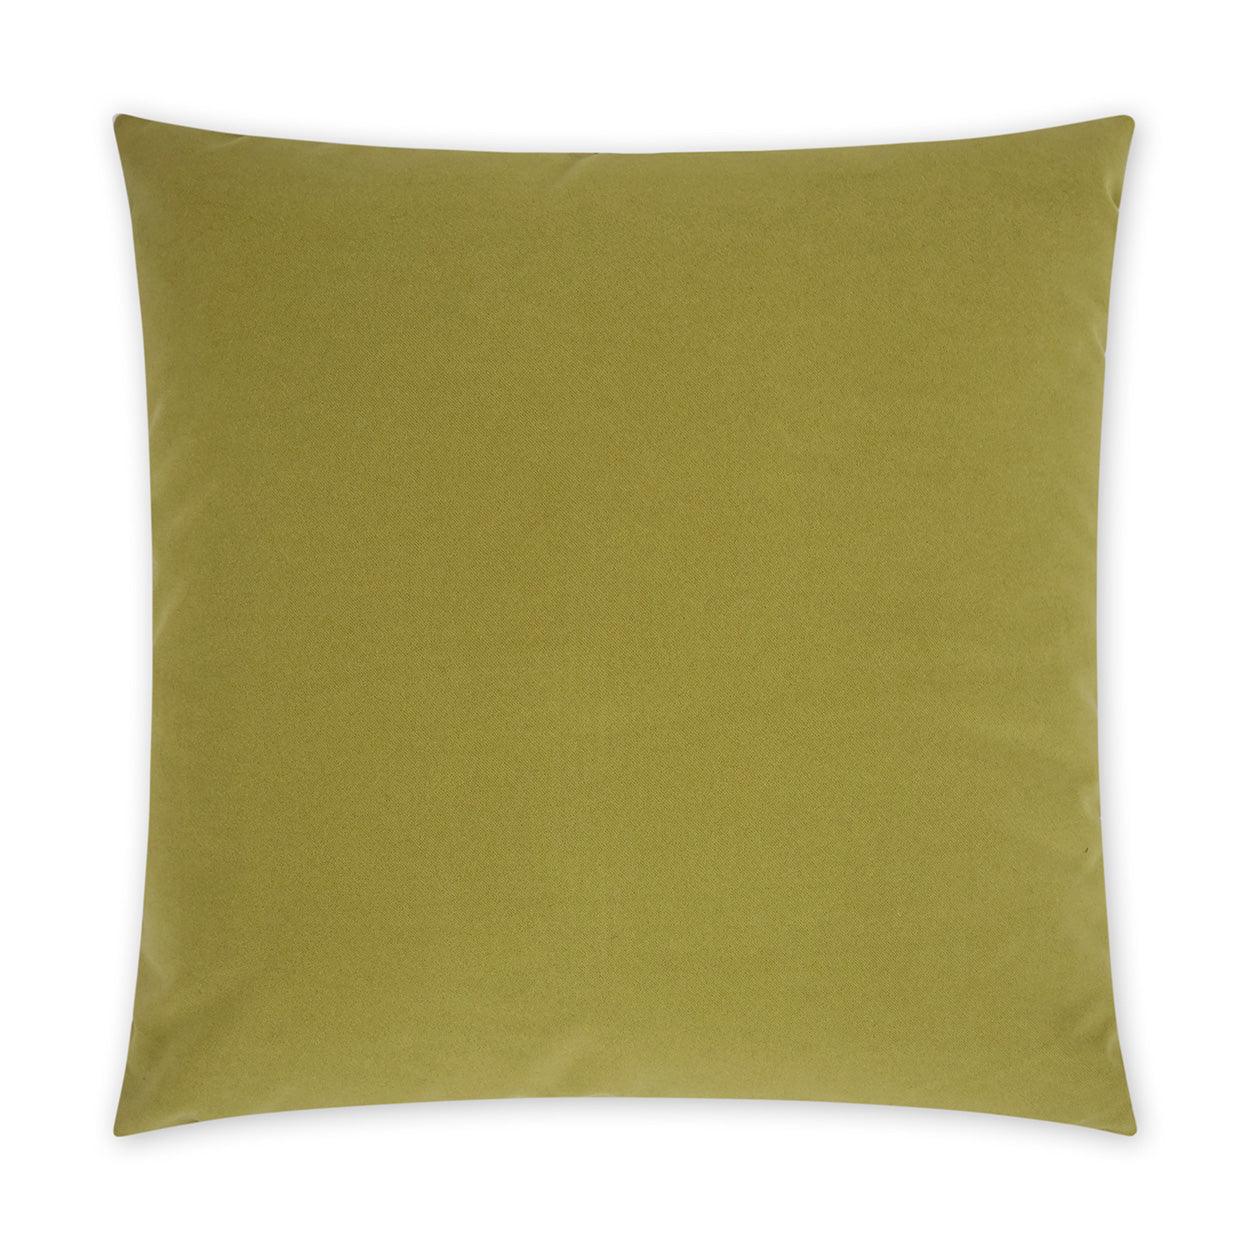 LOOMLAN Outdoor - Outdoor Sundance Duo Pillow - Leaf - Outdoor Pillows